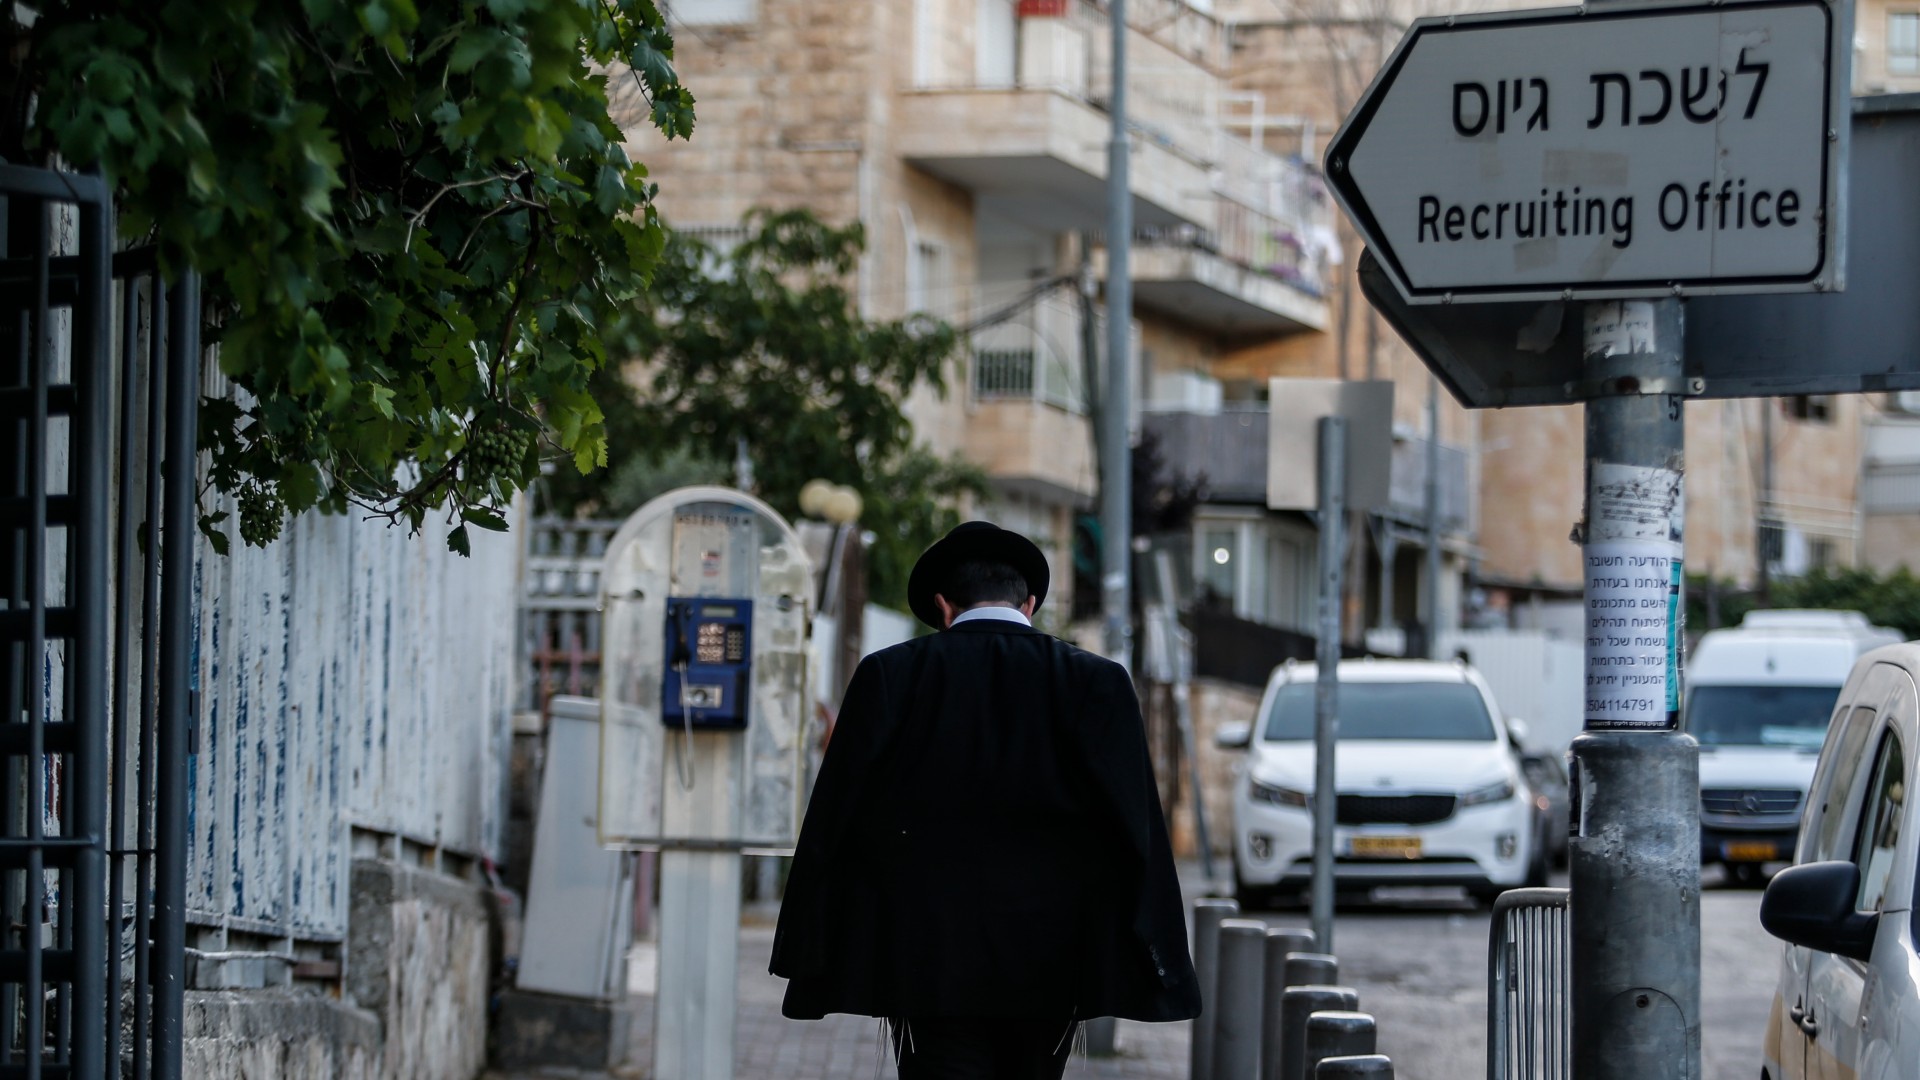 An ultra-Orthodox Jewish man standing at the Israeli army recruitment office in Jerusalem on 25 June (Reuters/Saeed Qaq/NurPhoto)